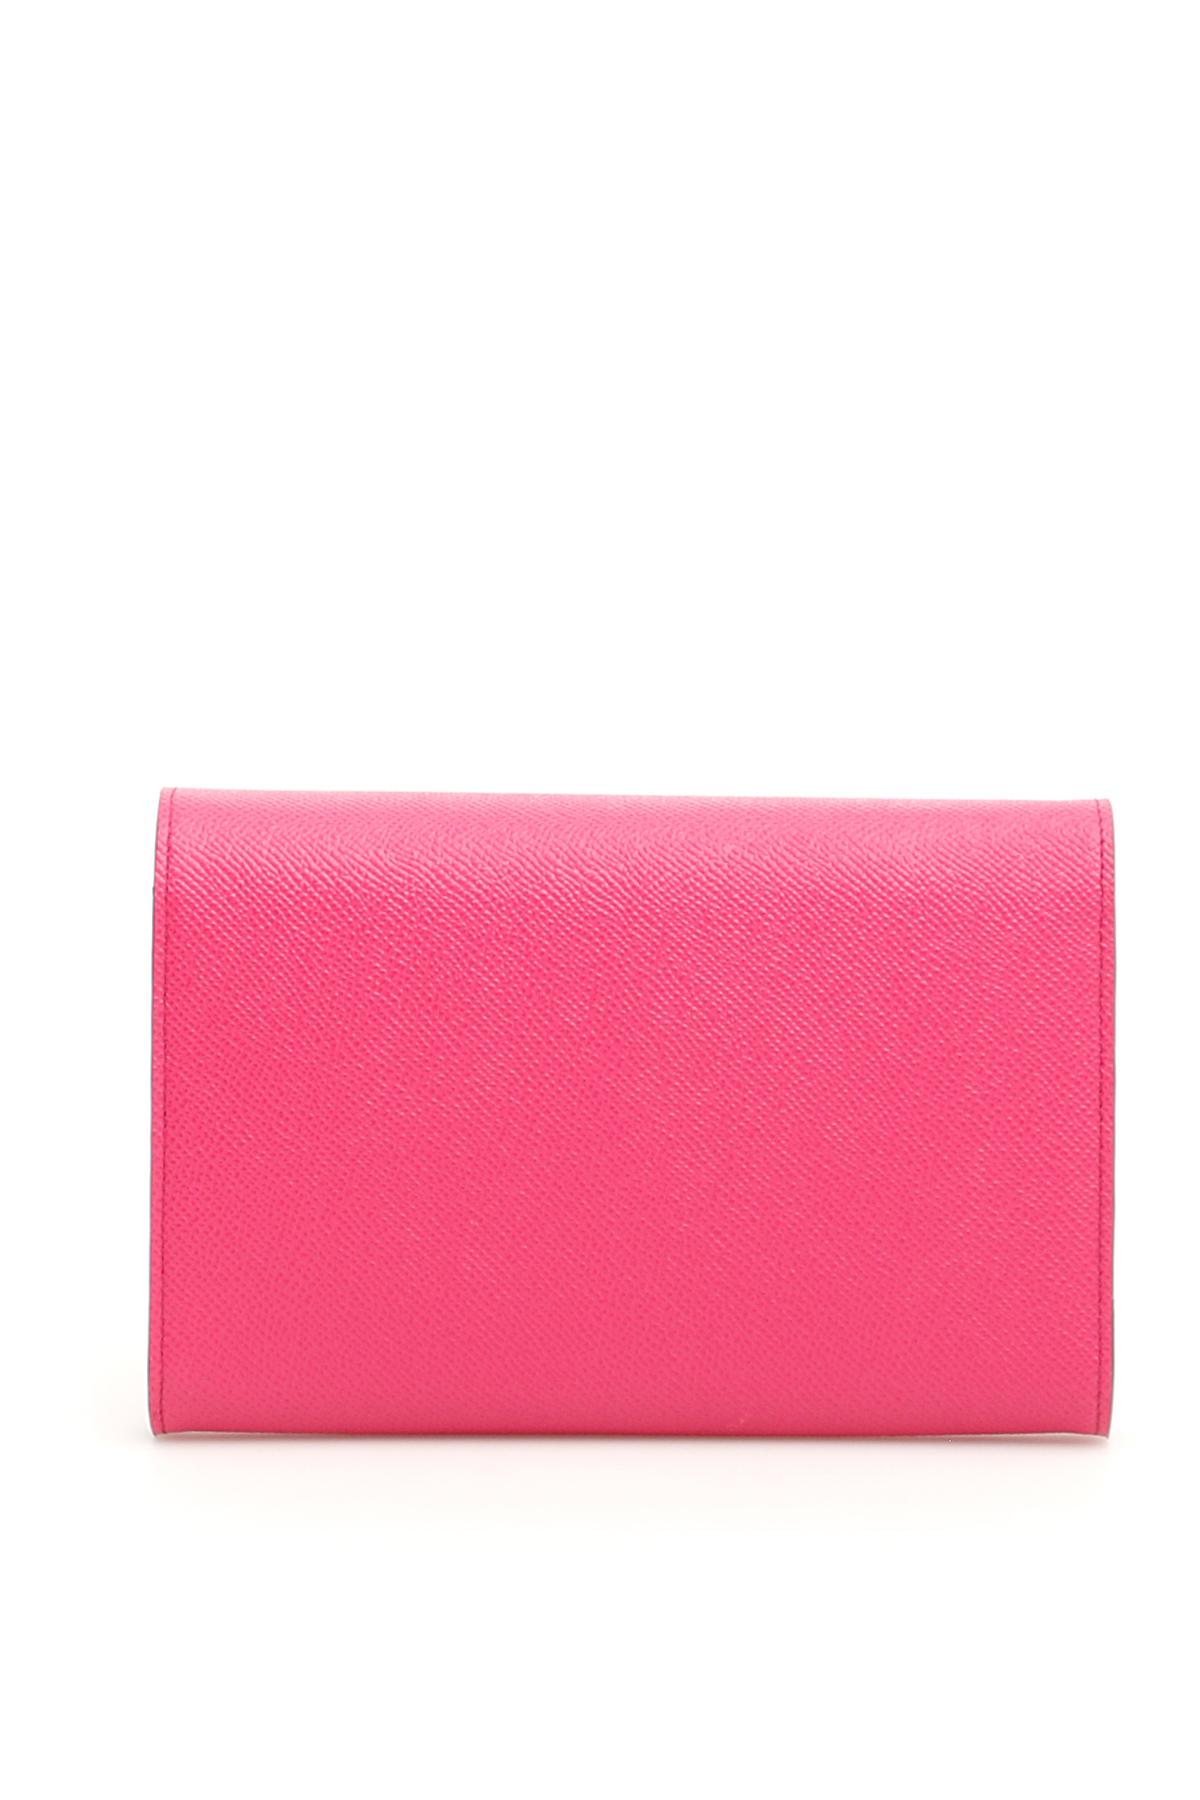 Dolce & Gabbana Crystal Dg Wallet Bag in Fuchsia,Pink (Pink) - Lyst